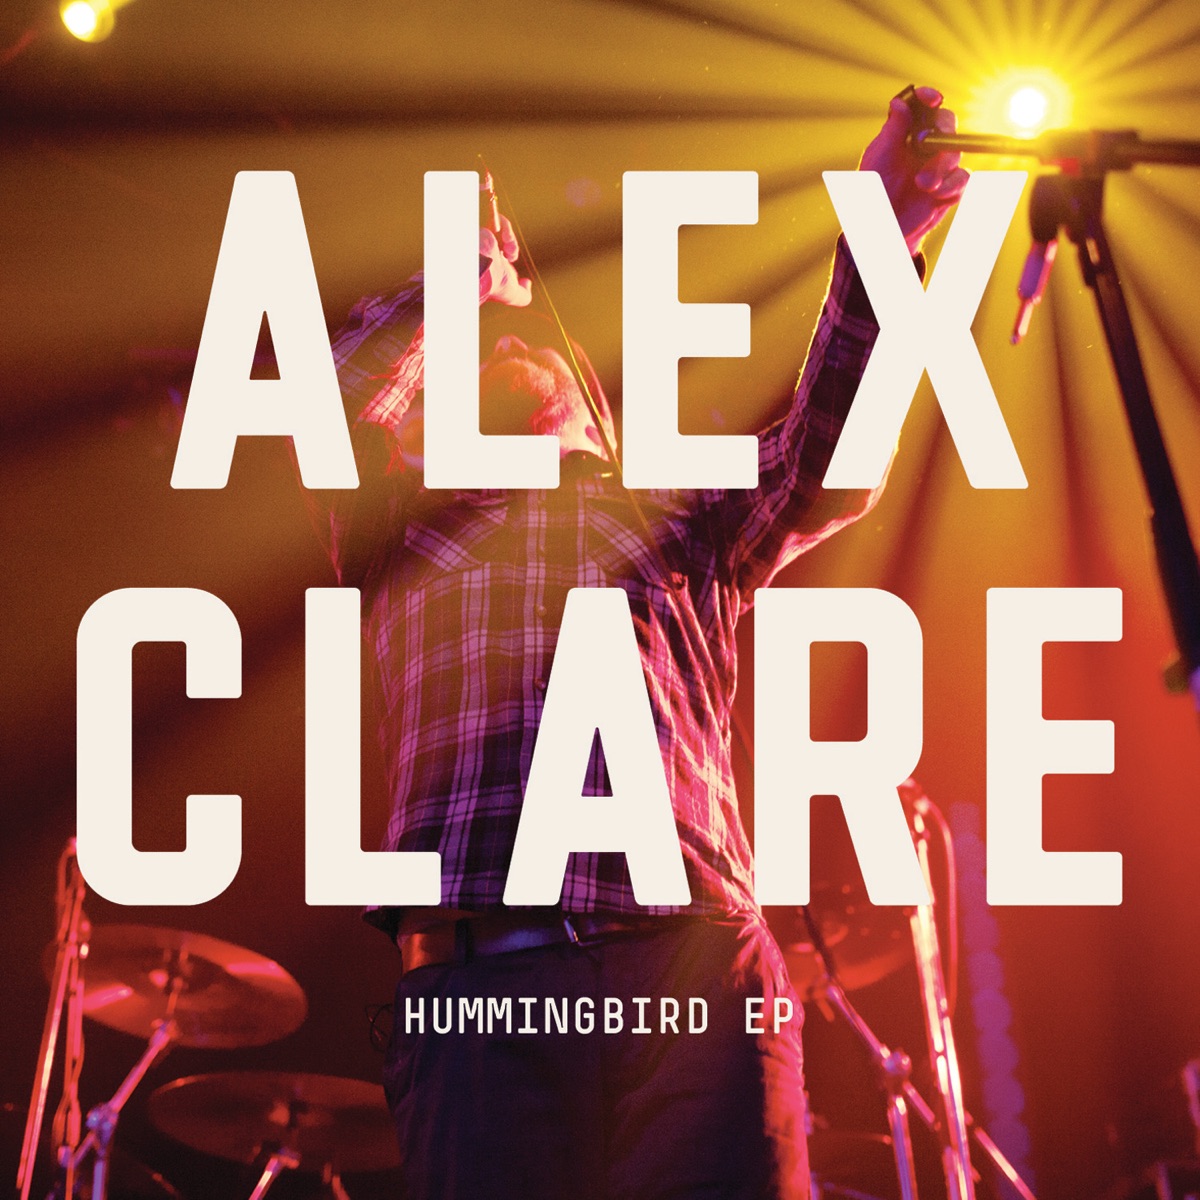 Humming Bird - Single - Album by Alex Clare - Apple Music